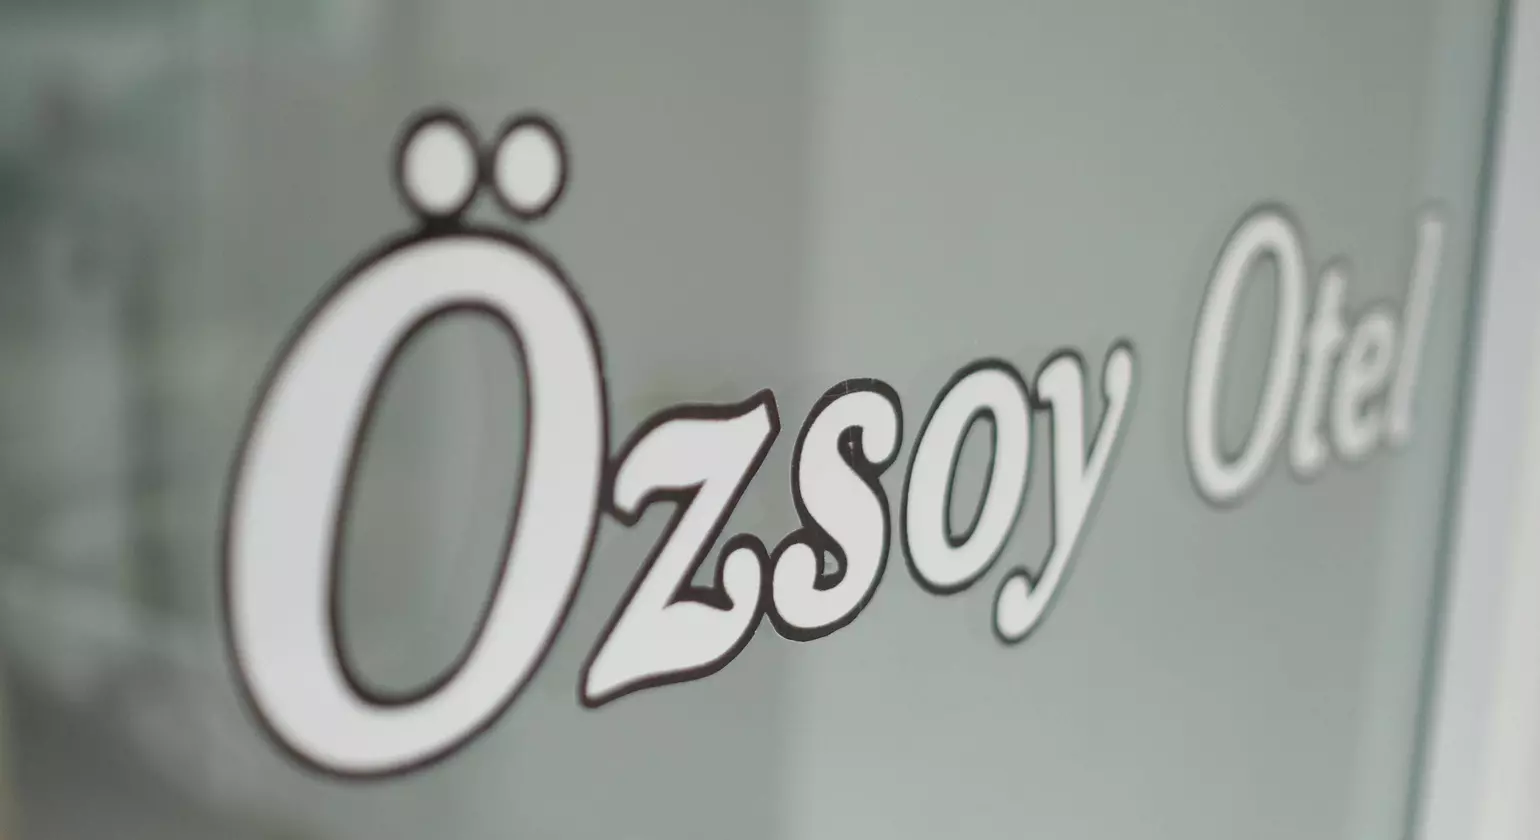 Ozsoy Hotel